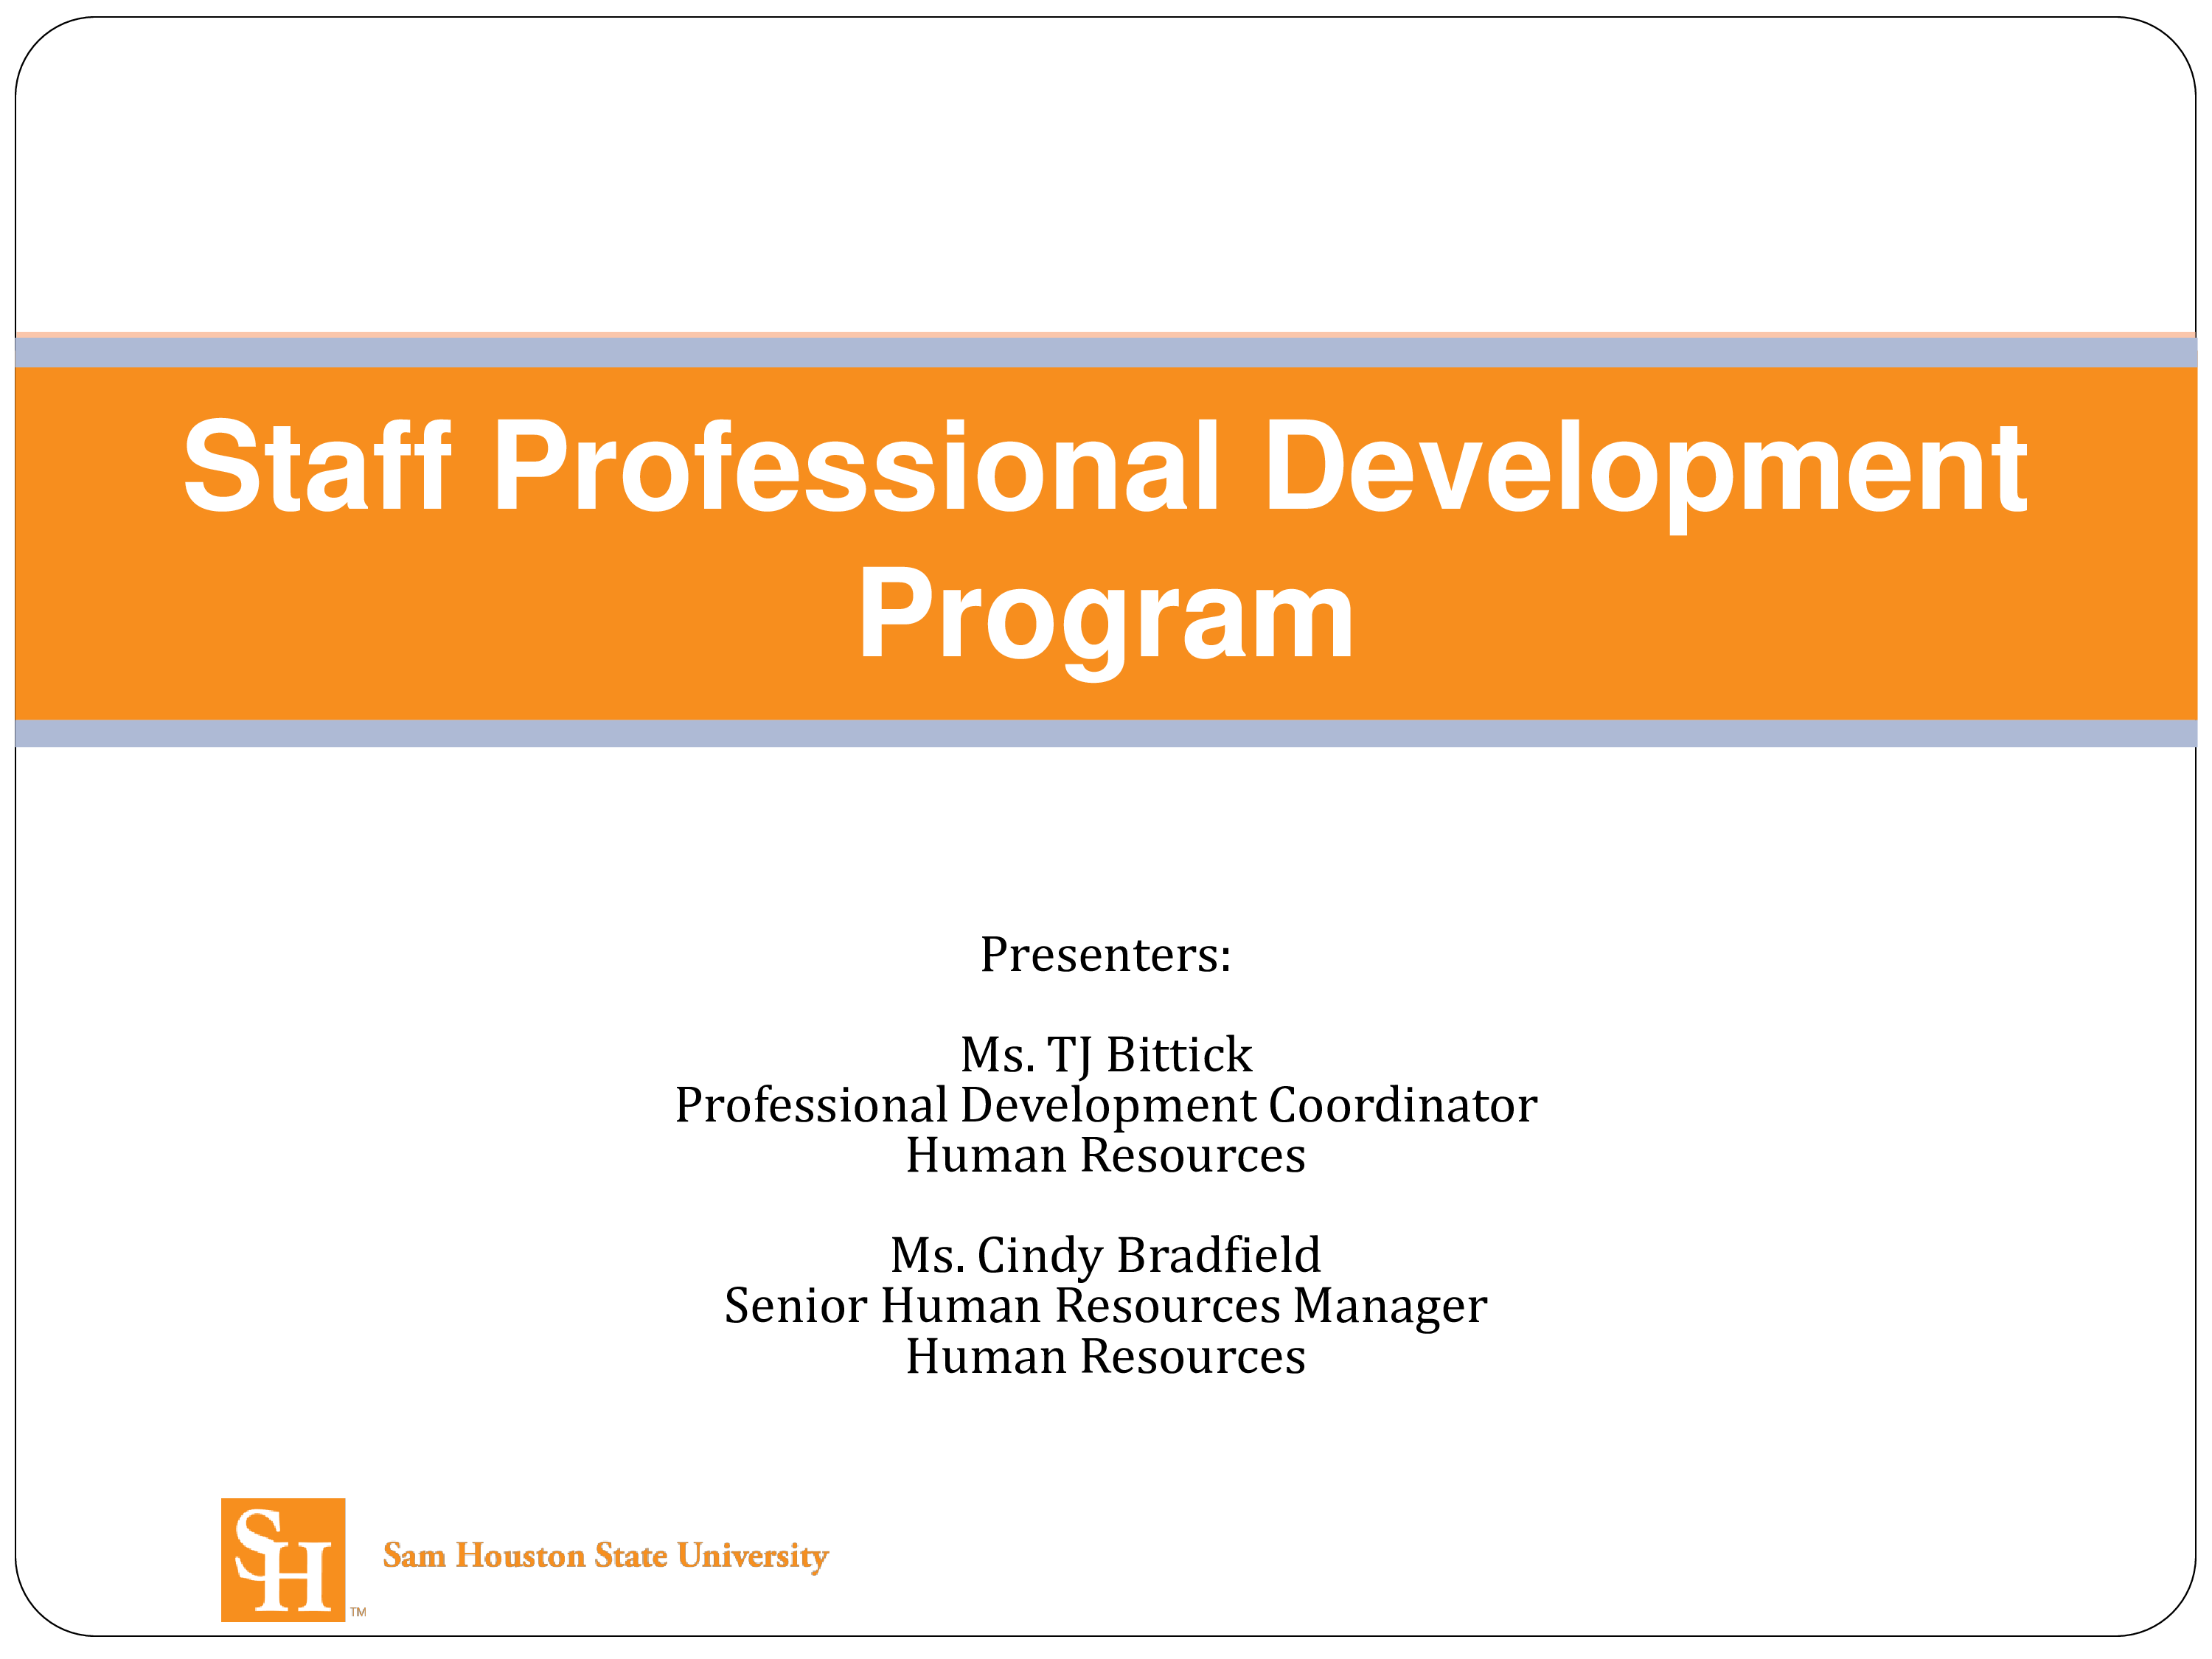 Staff Professional Development Plan main image